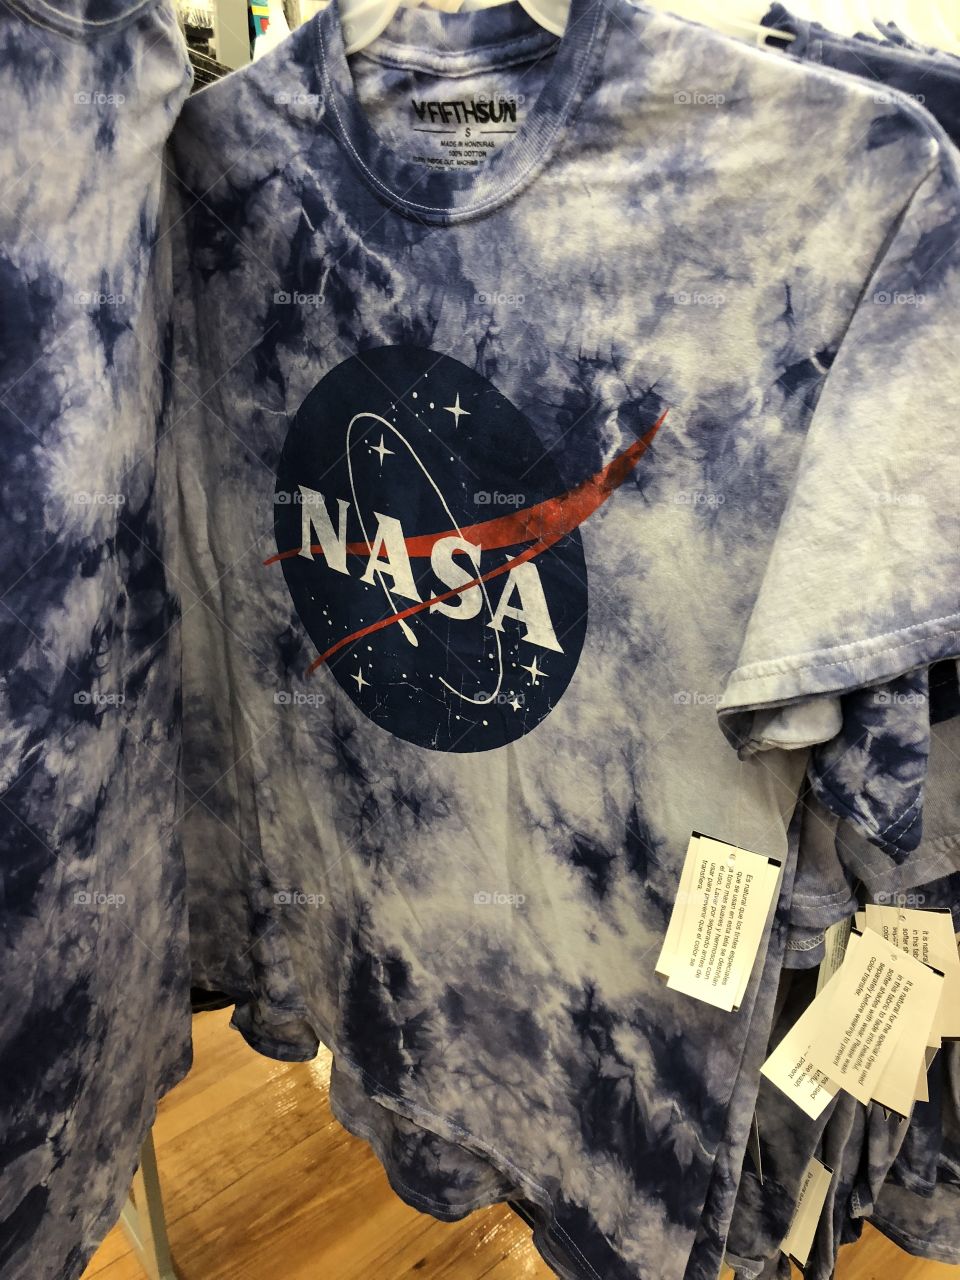 Picture of a tie dye NASA shirt.